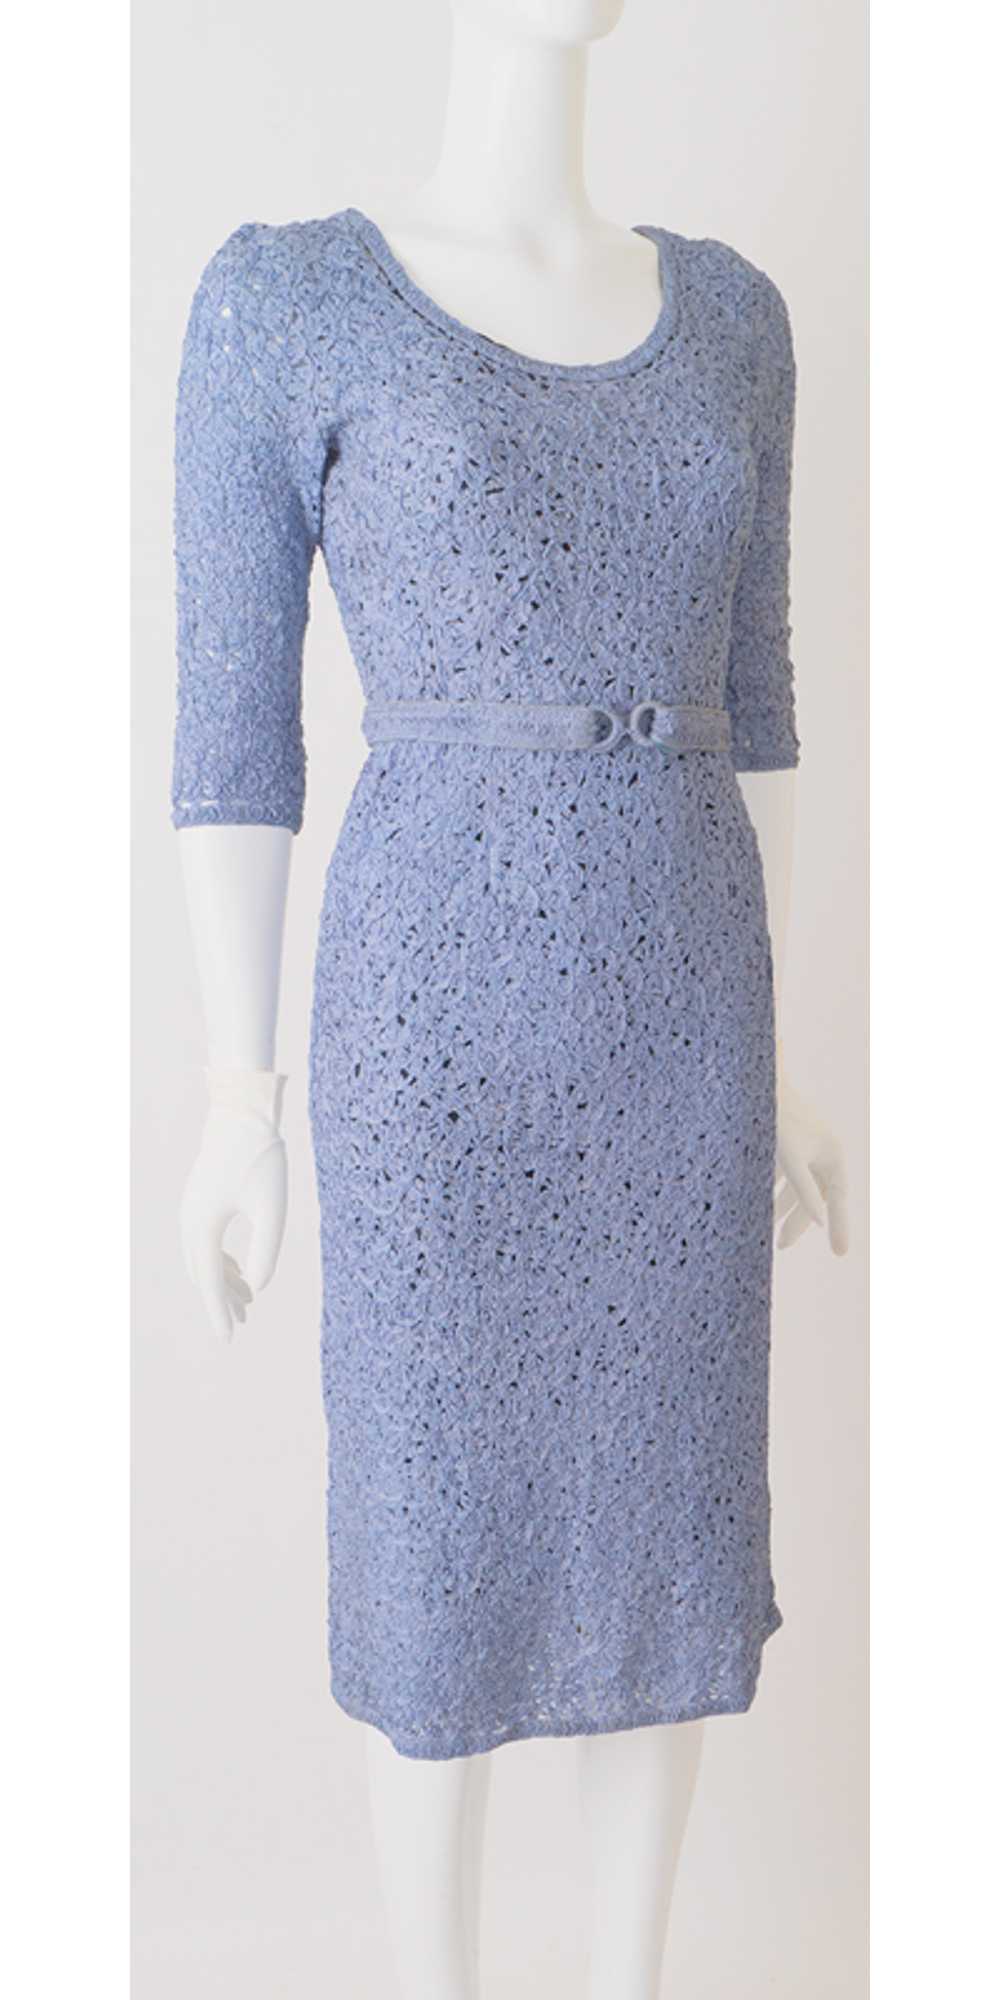 Periwinkle Blue 1950s Ribbon Dress - image 2